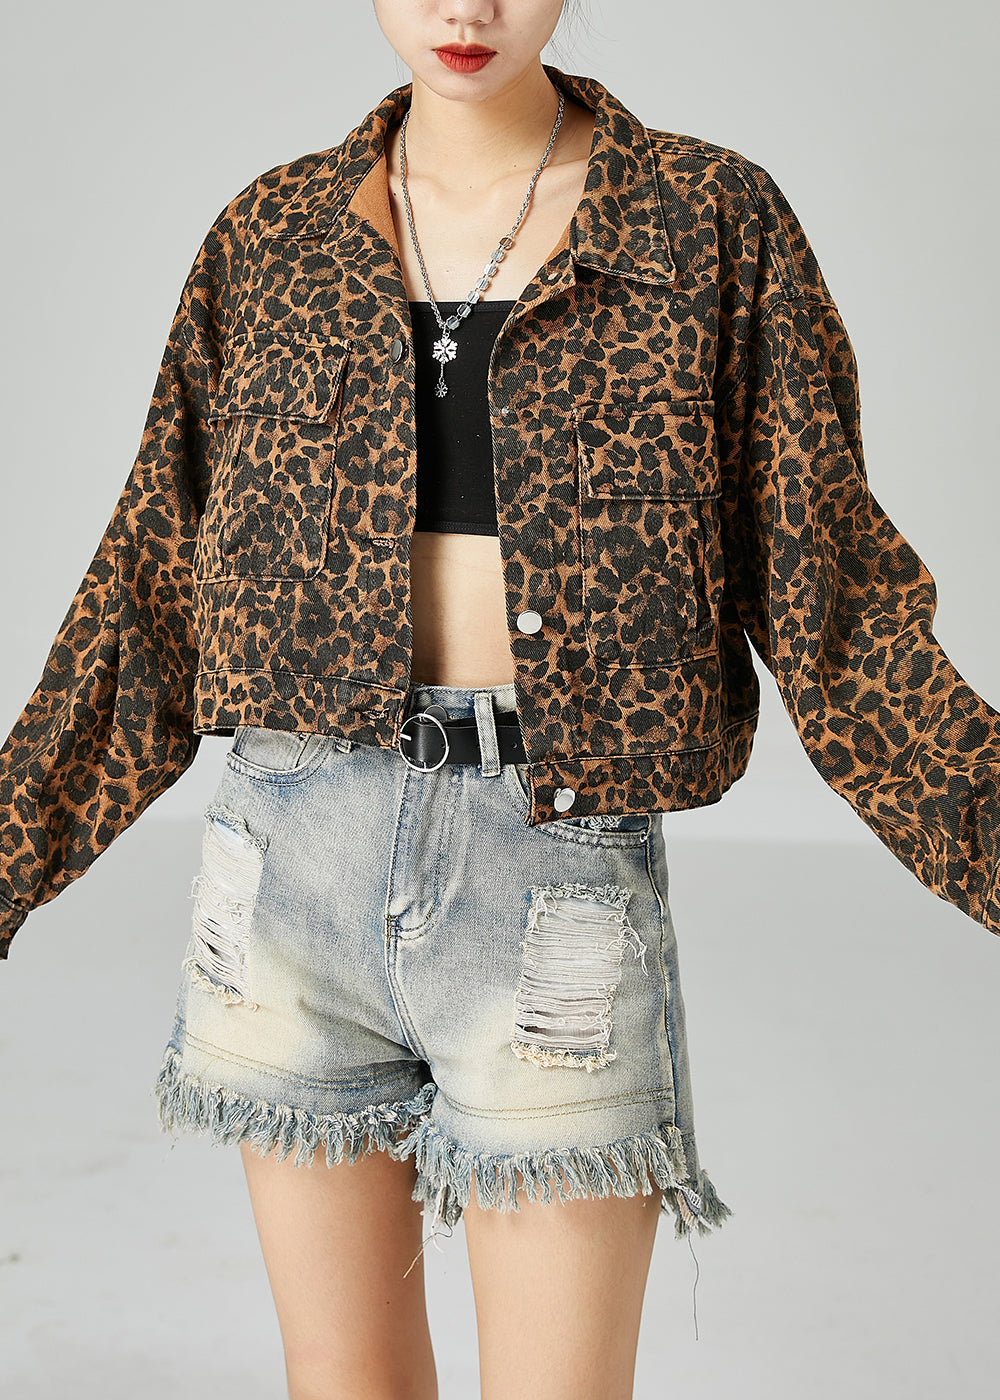 Fashion Coffee Peter Pan Collar Leopard Print Pockets Cotton Coats Spring LY2441 - fabuloryshop